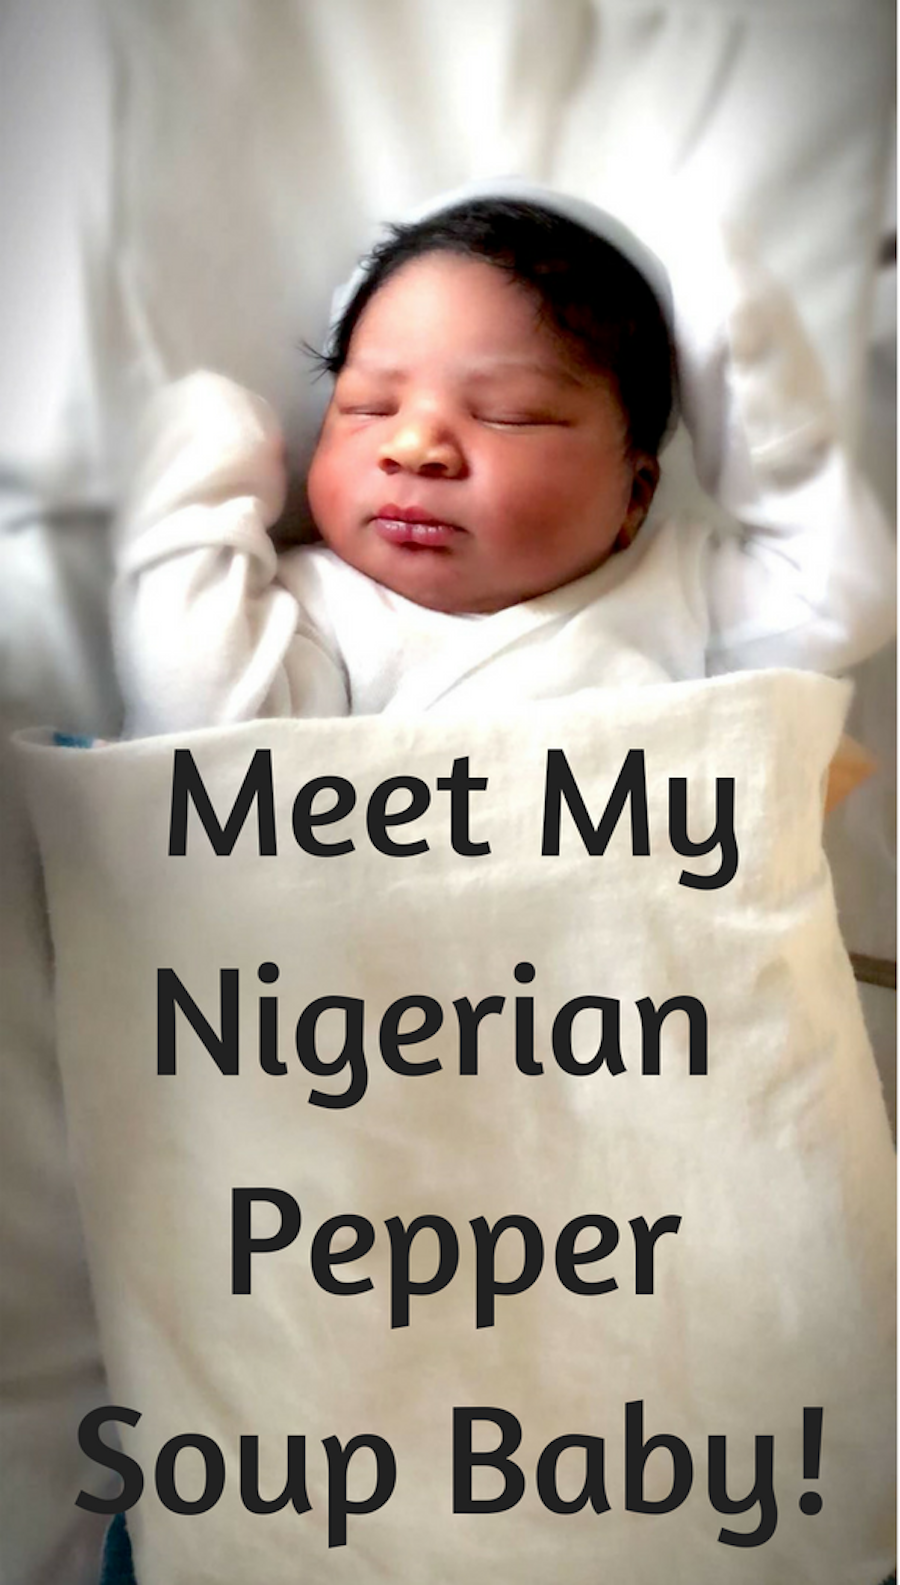 My Nigerian Pepper Soup Baby